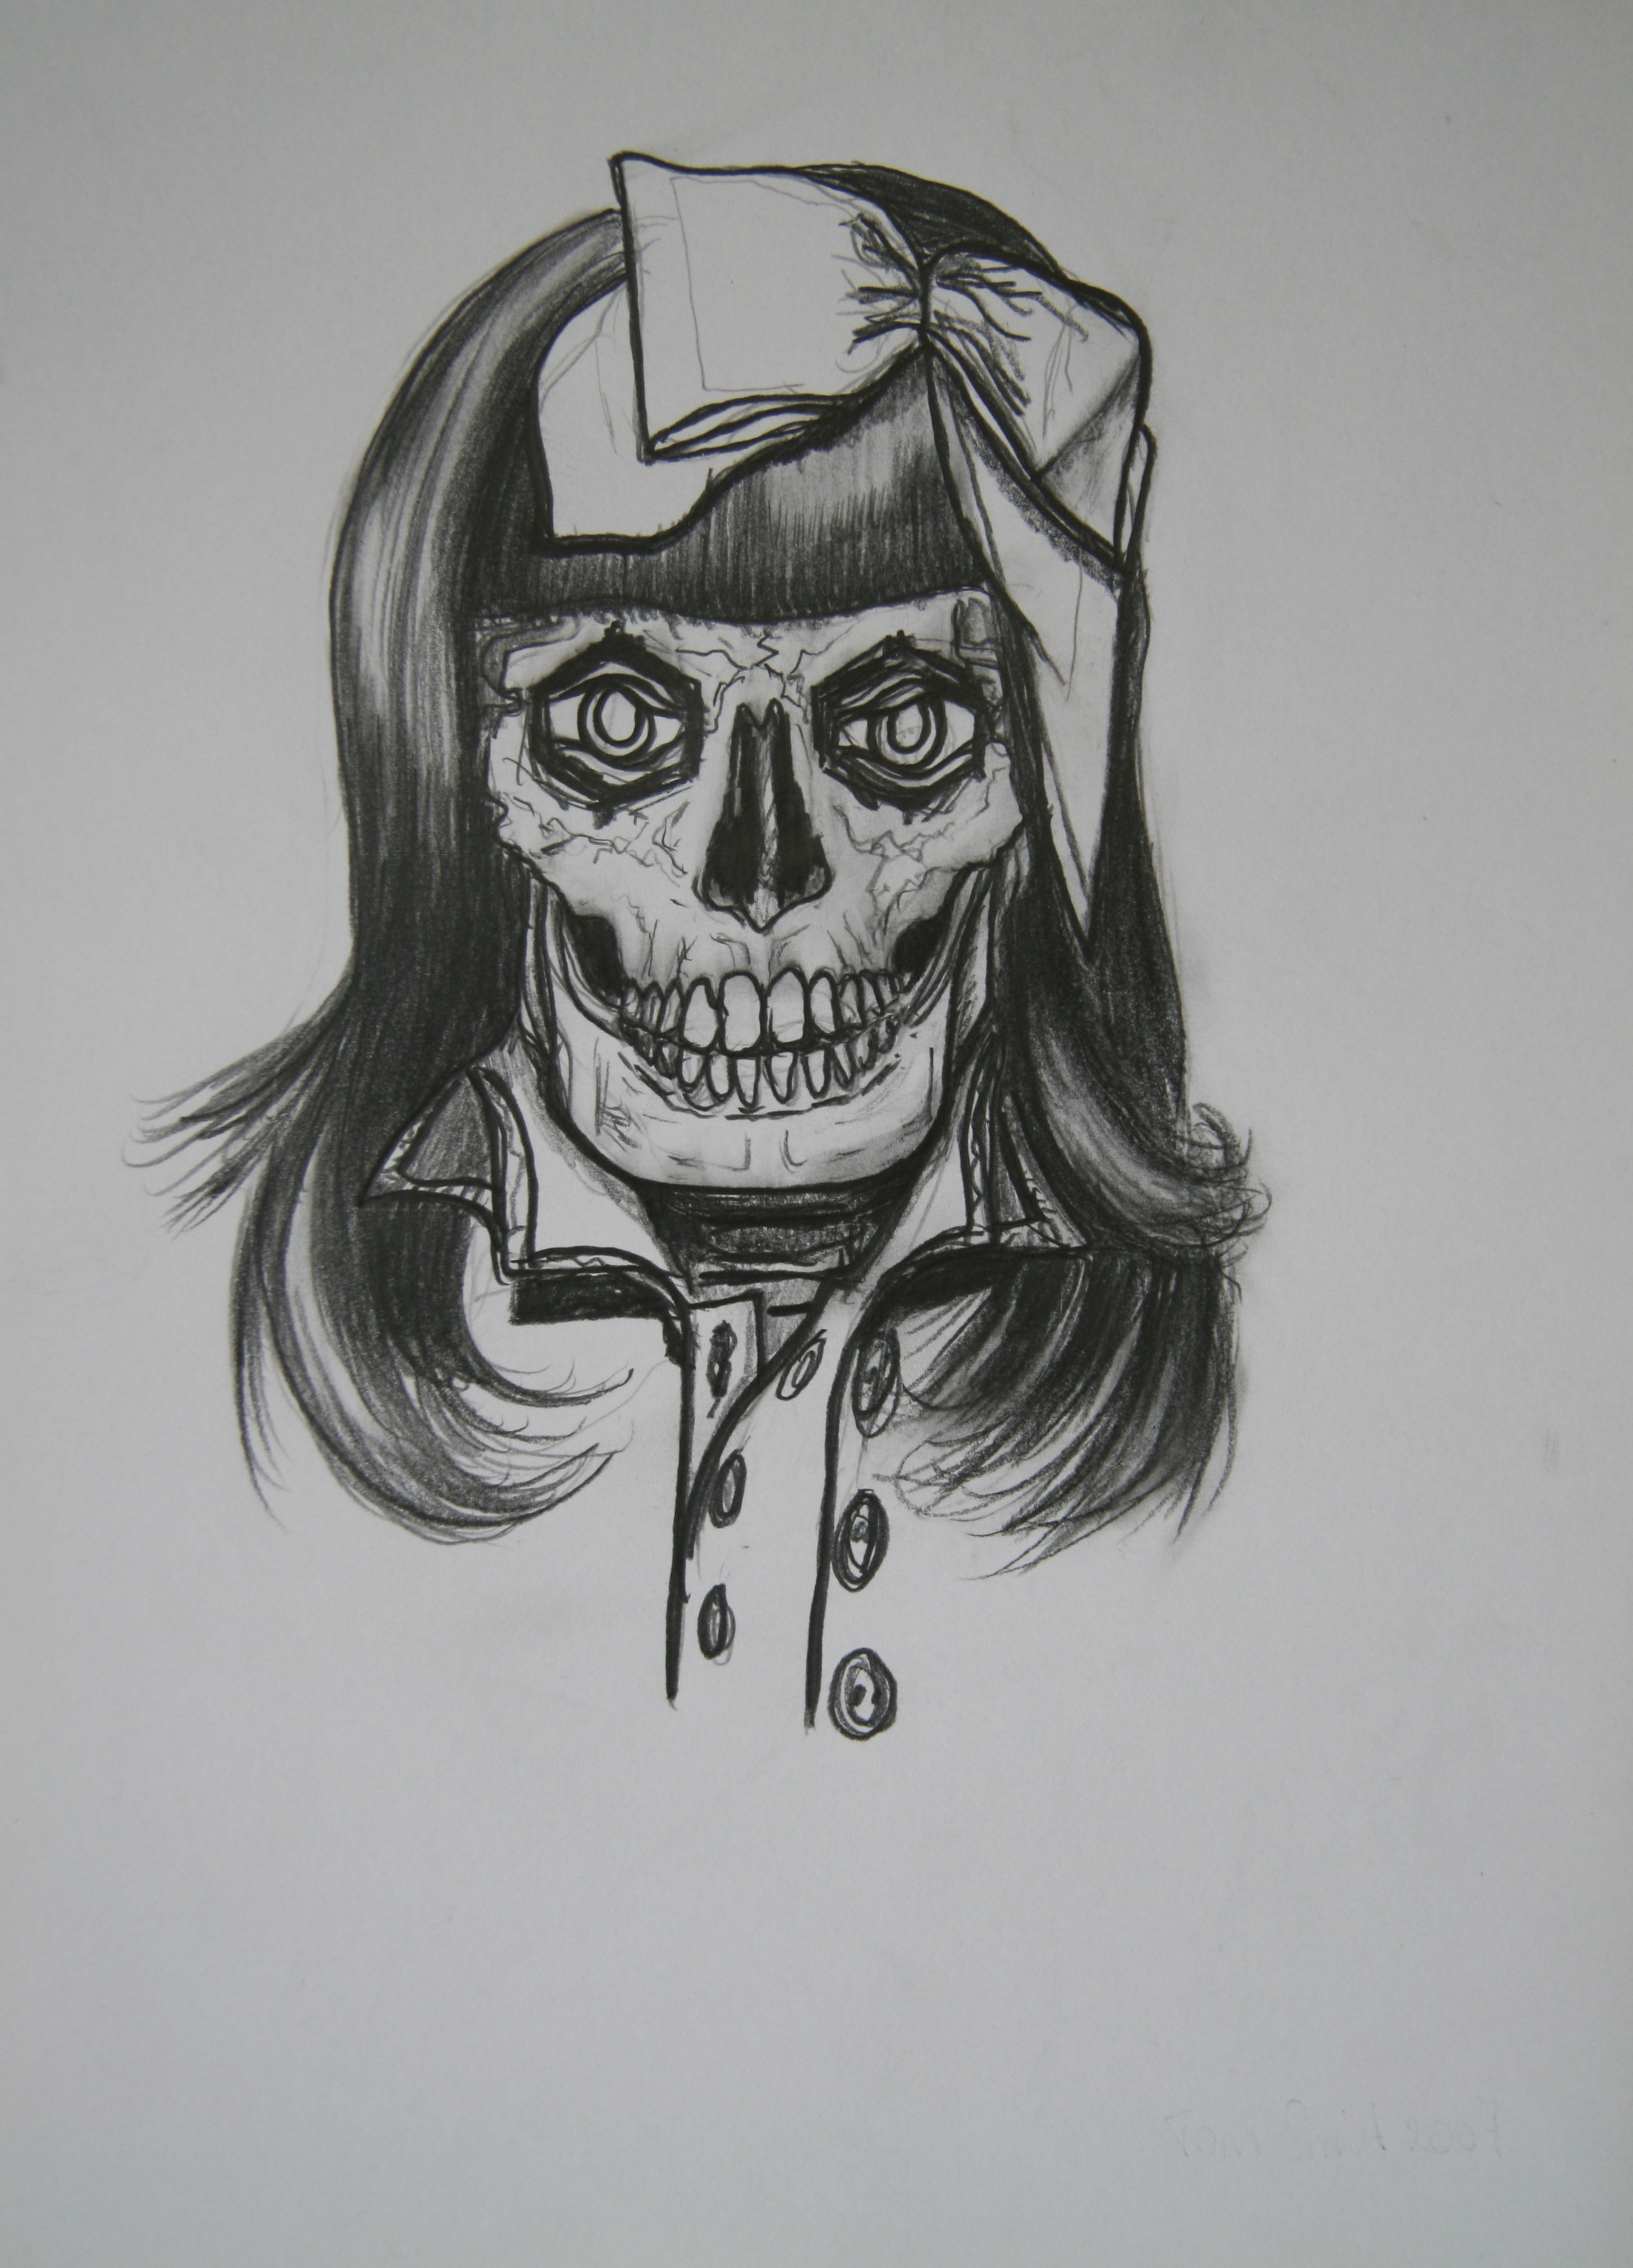 Skull 10, 30x21cm, pencil on paper